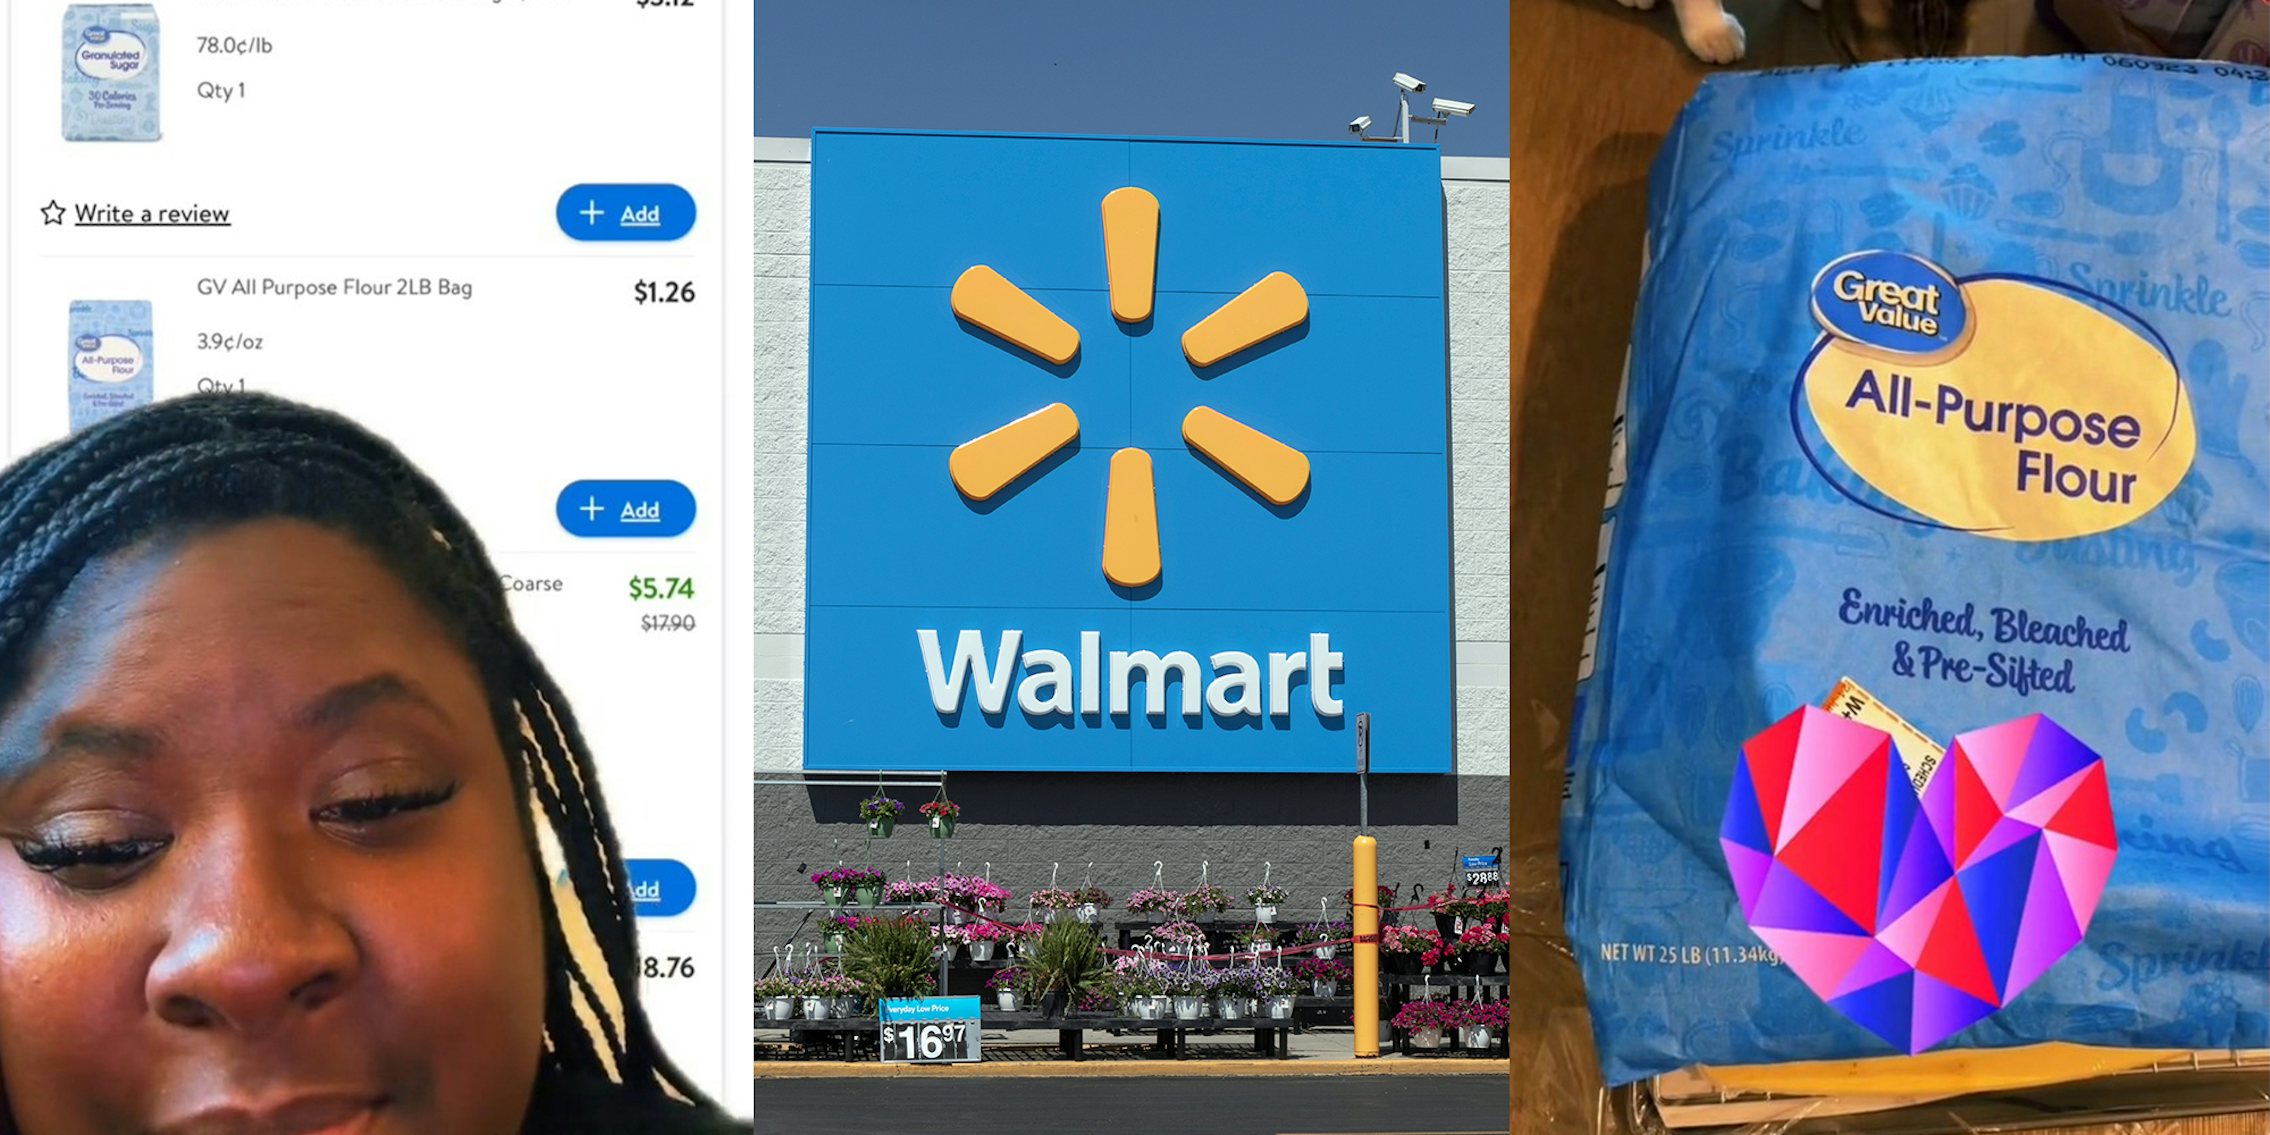 Walmart customer asks for 2-pound bag of Great Value flour. Walmart picker gives her 25-pound bag instead